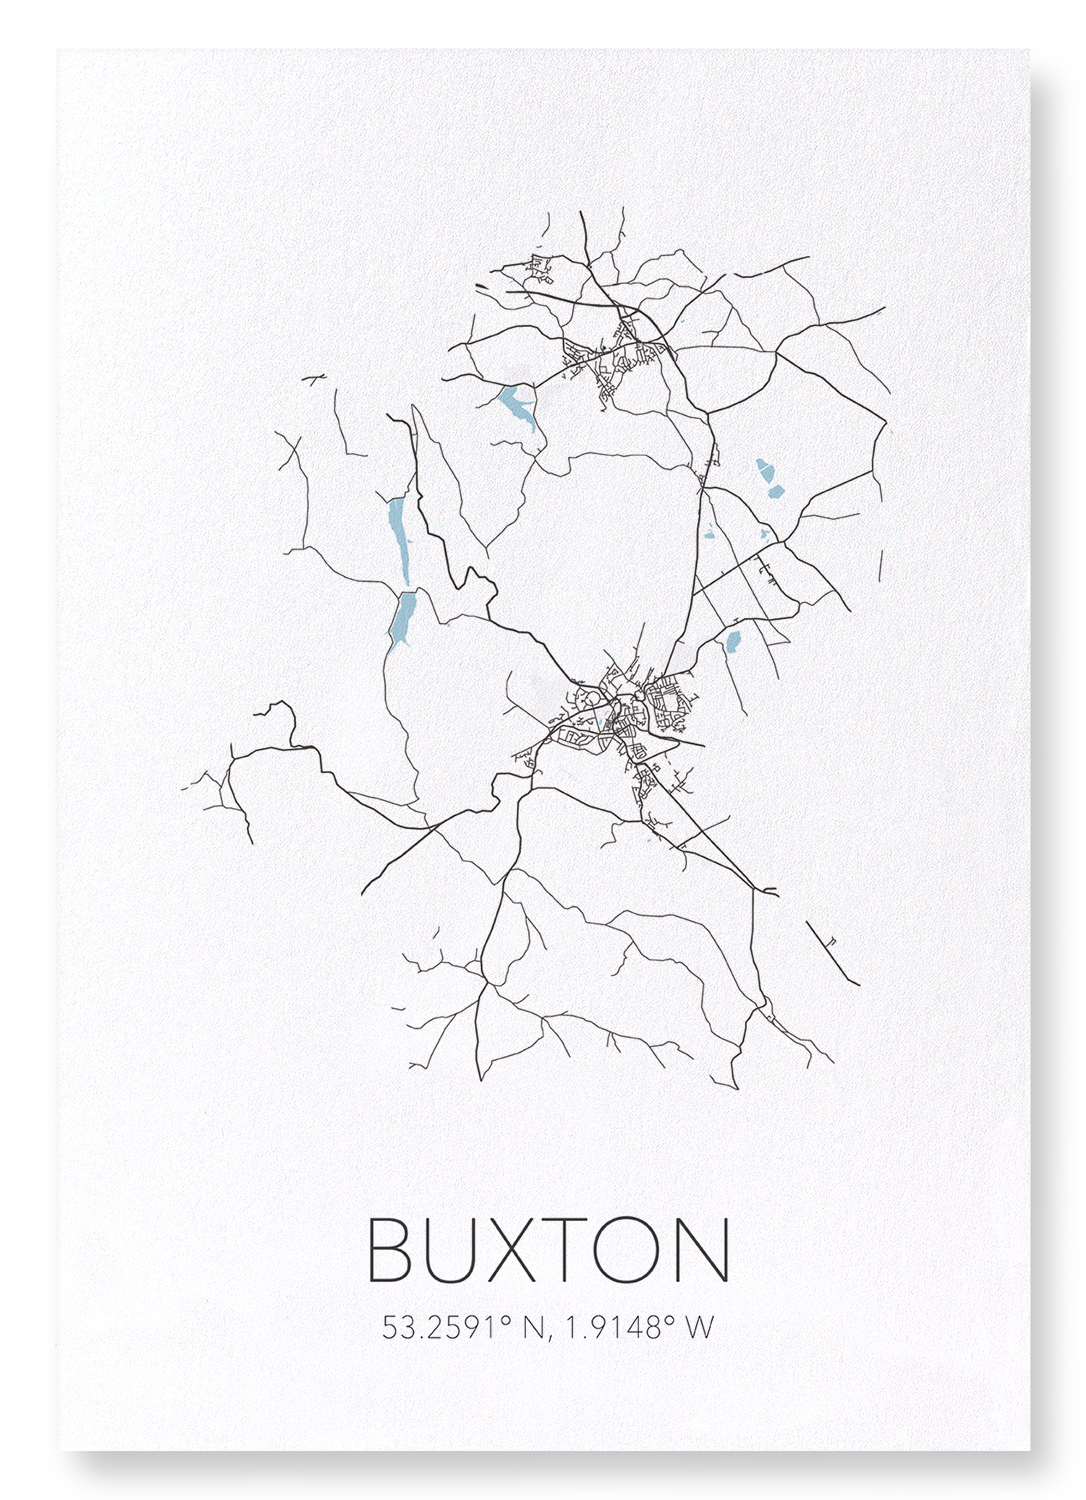 BUXTON CUTOUT: Map Cutout Art Print